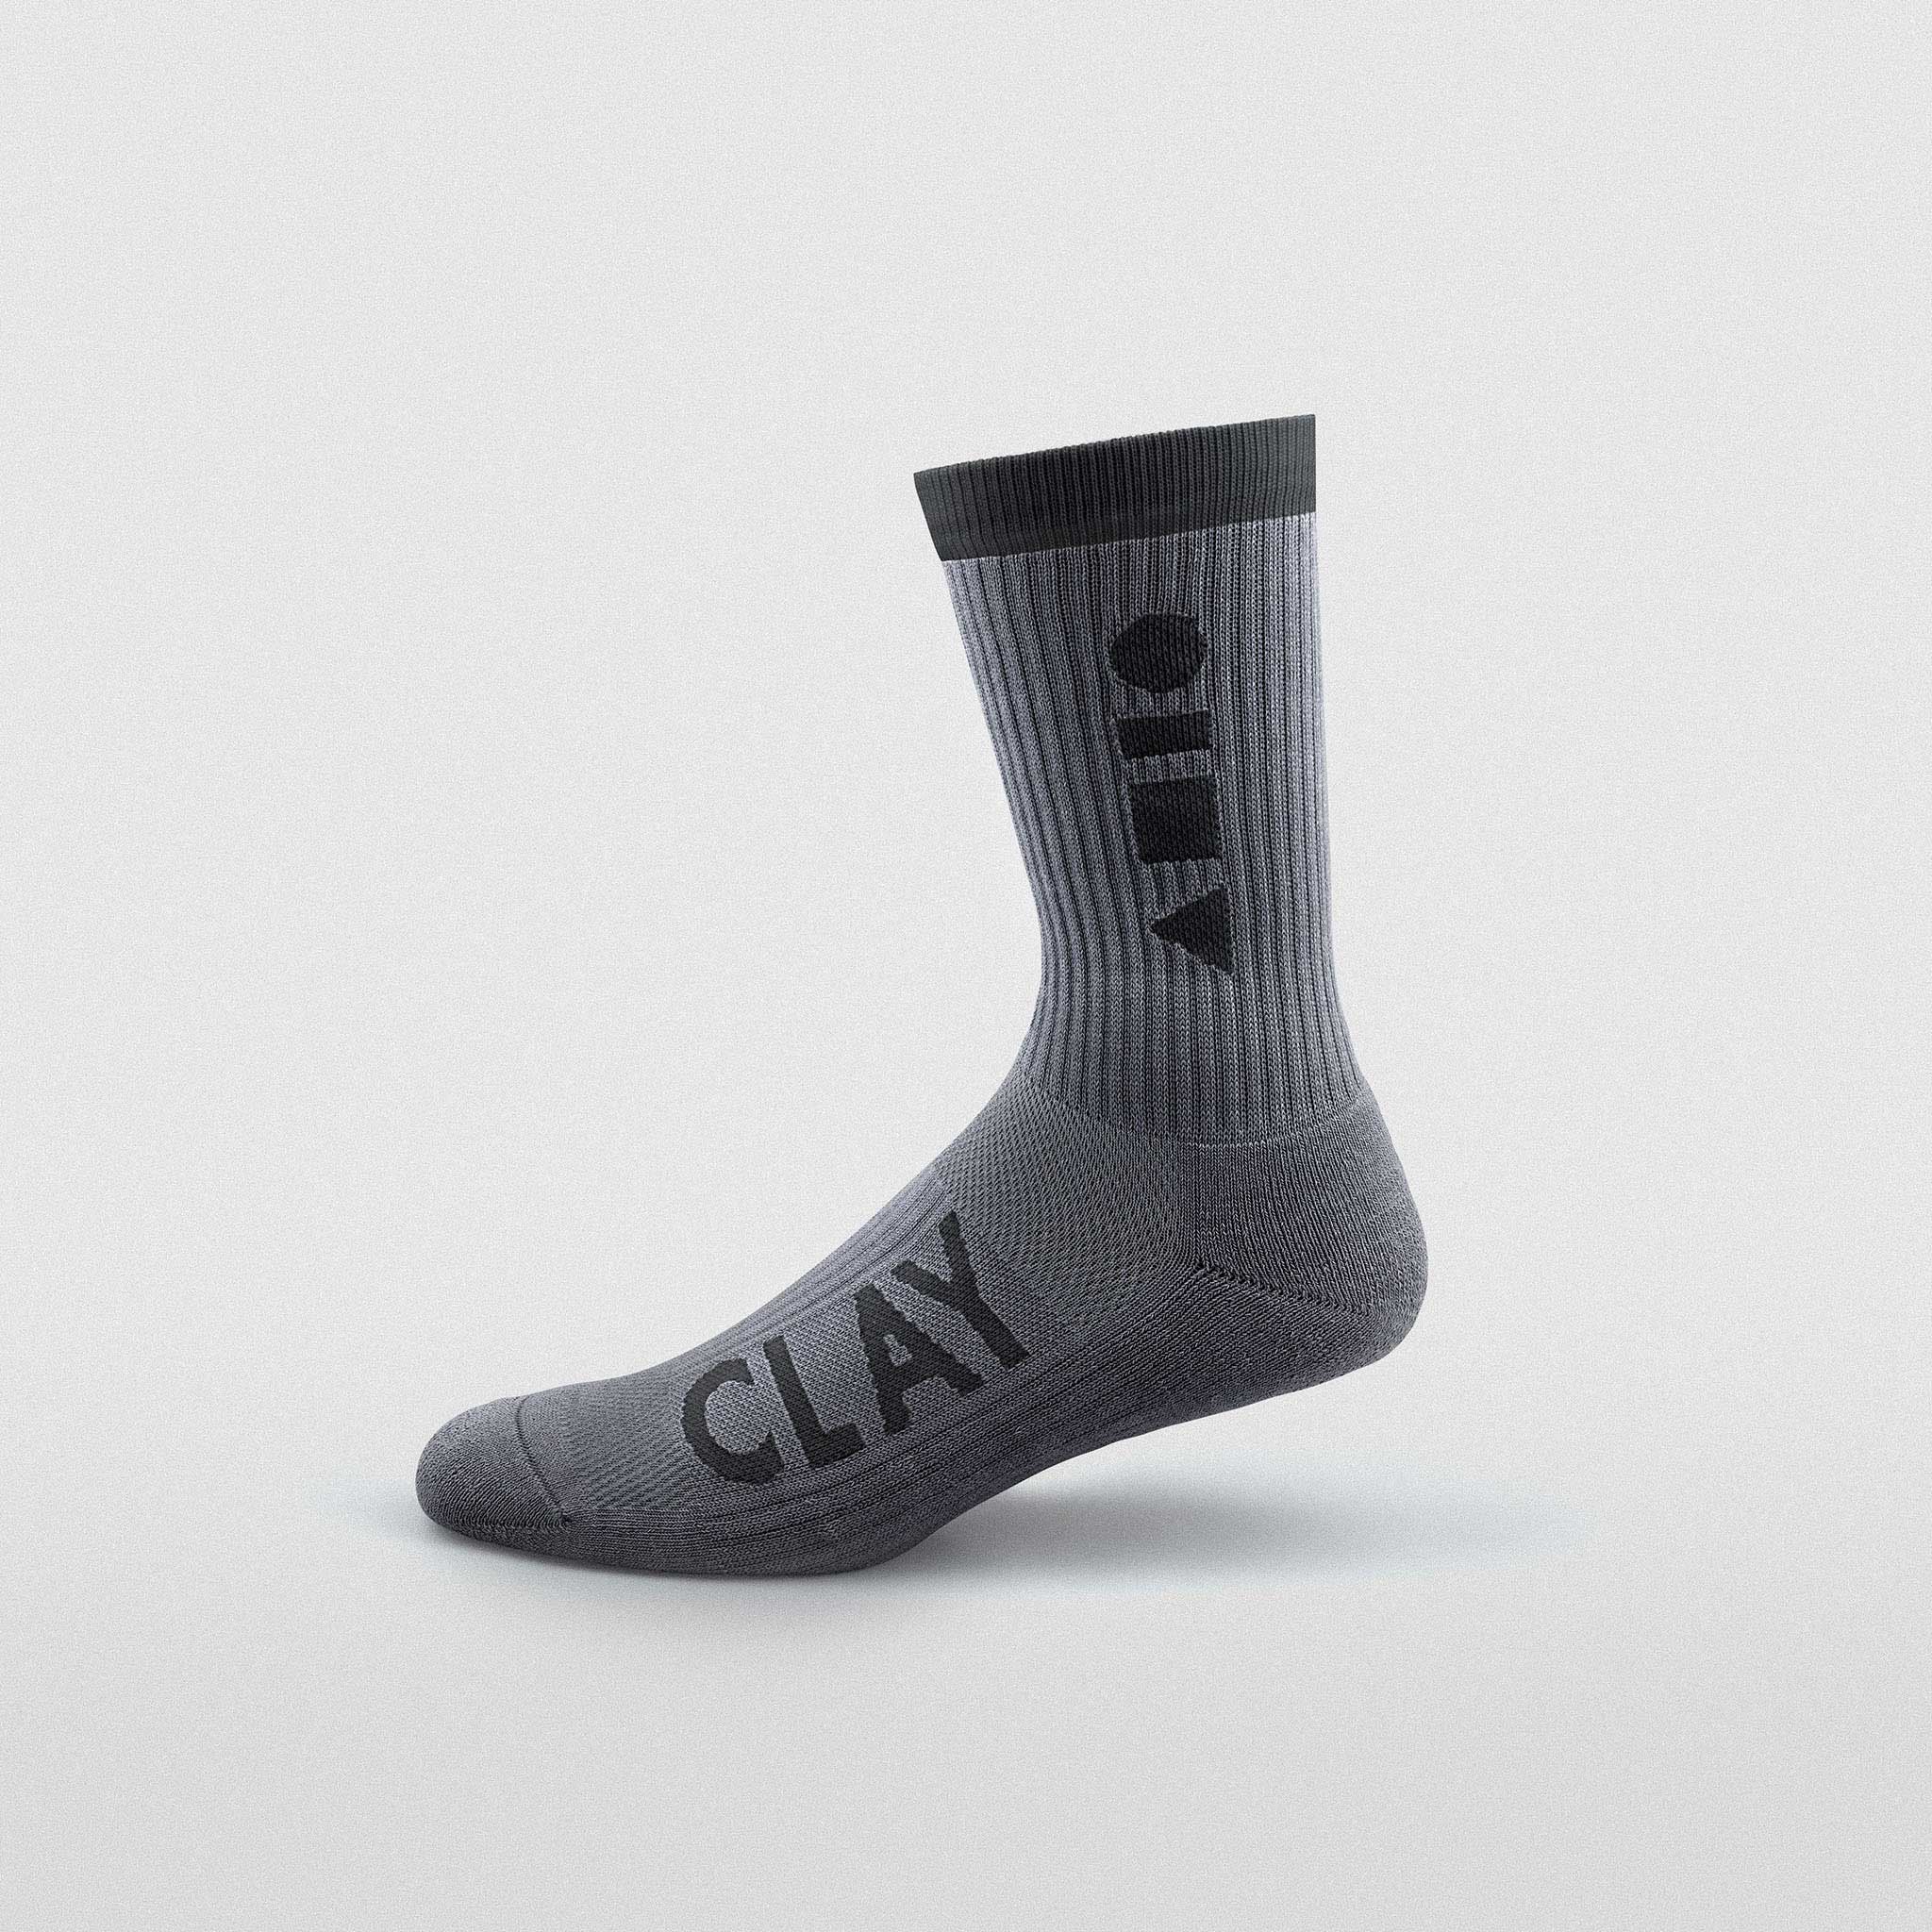 Clay Active men's grey athletic crew sock product image in studio.